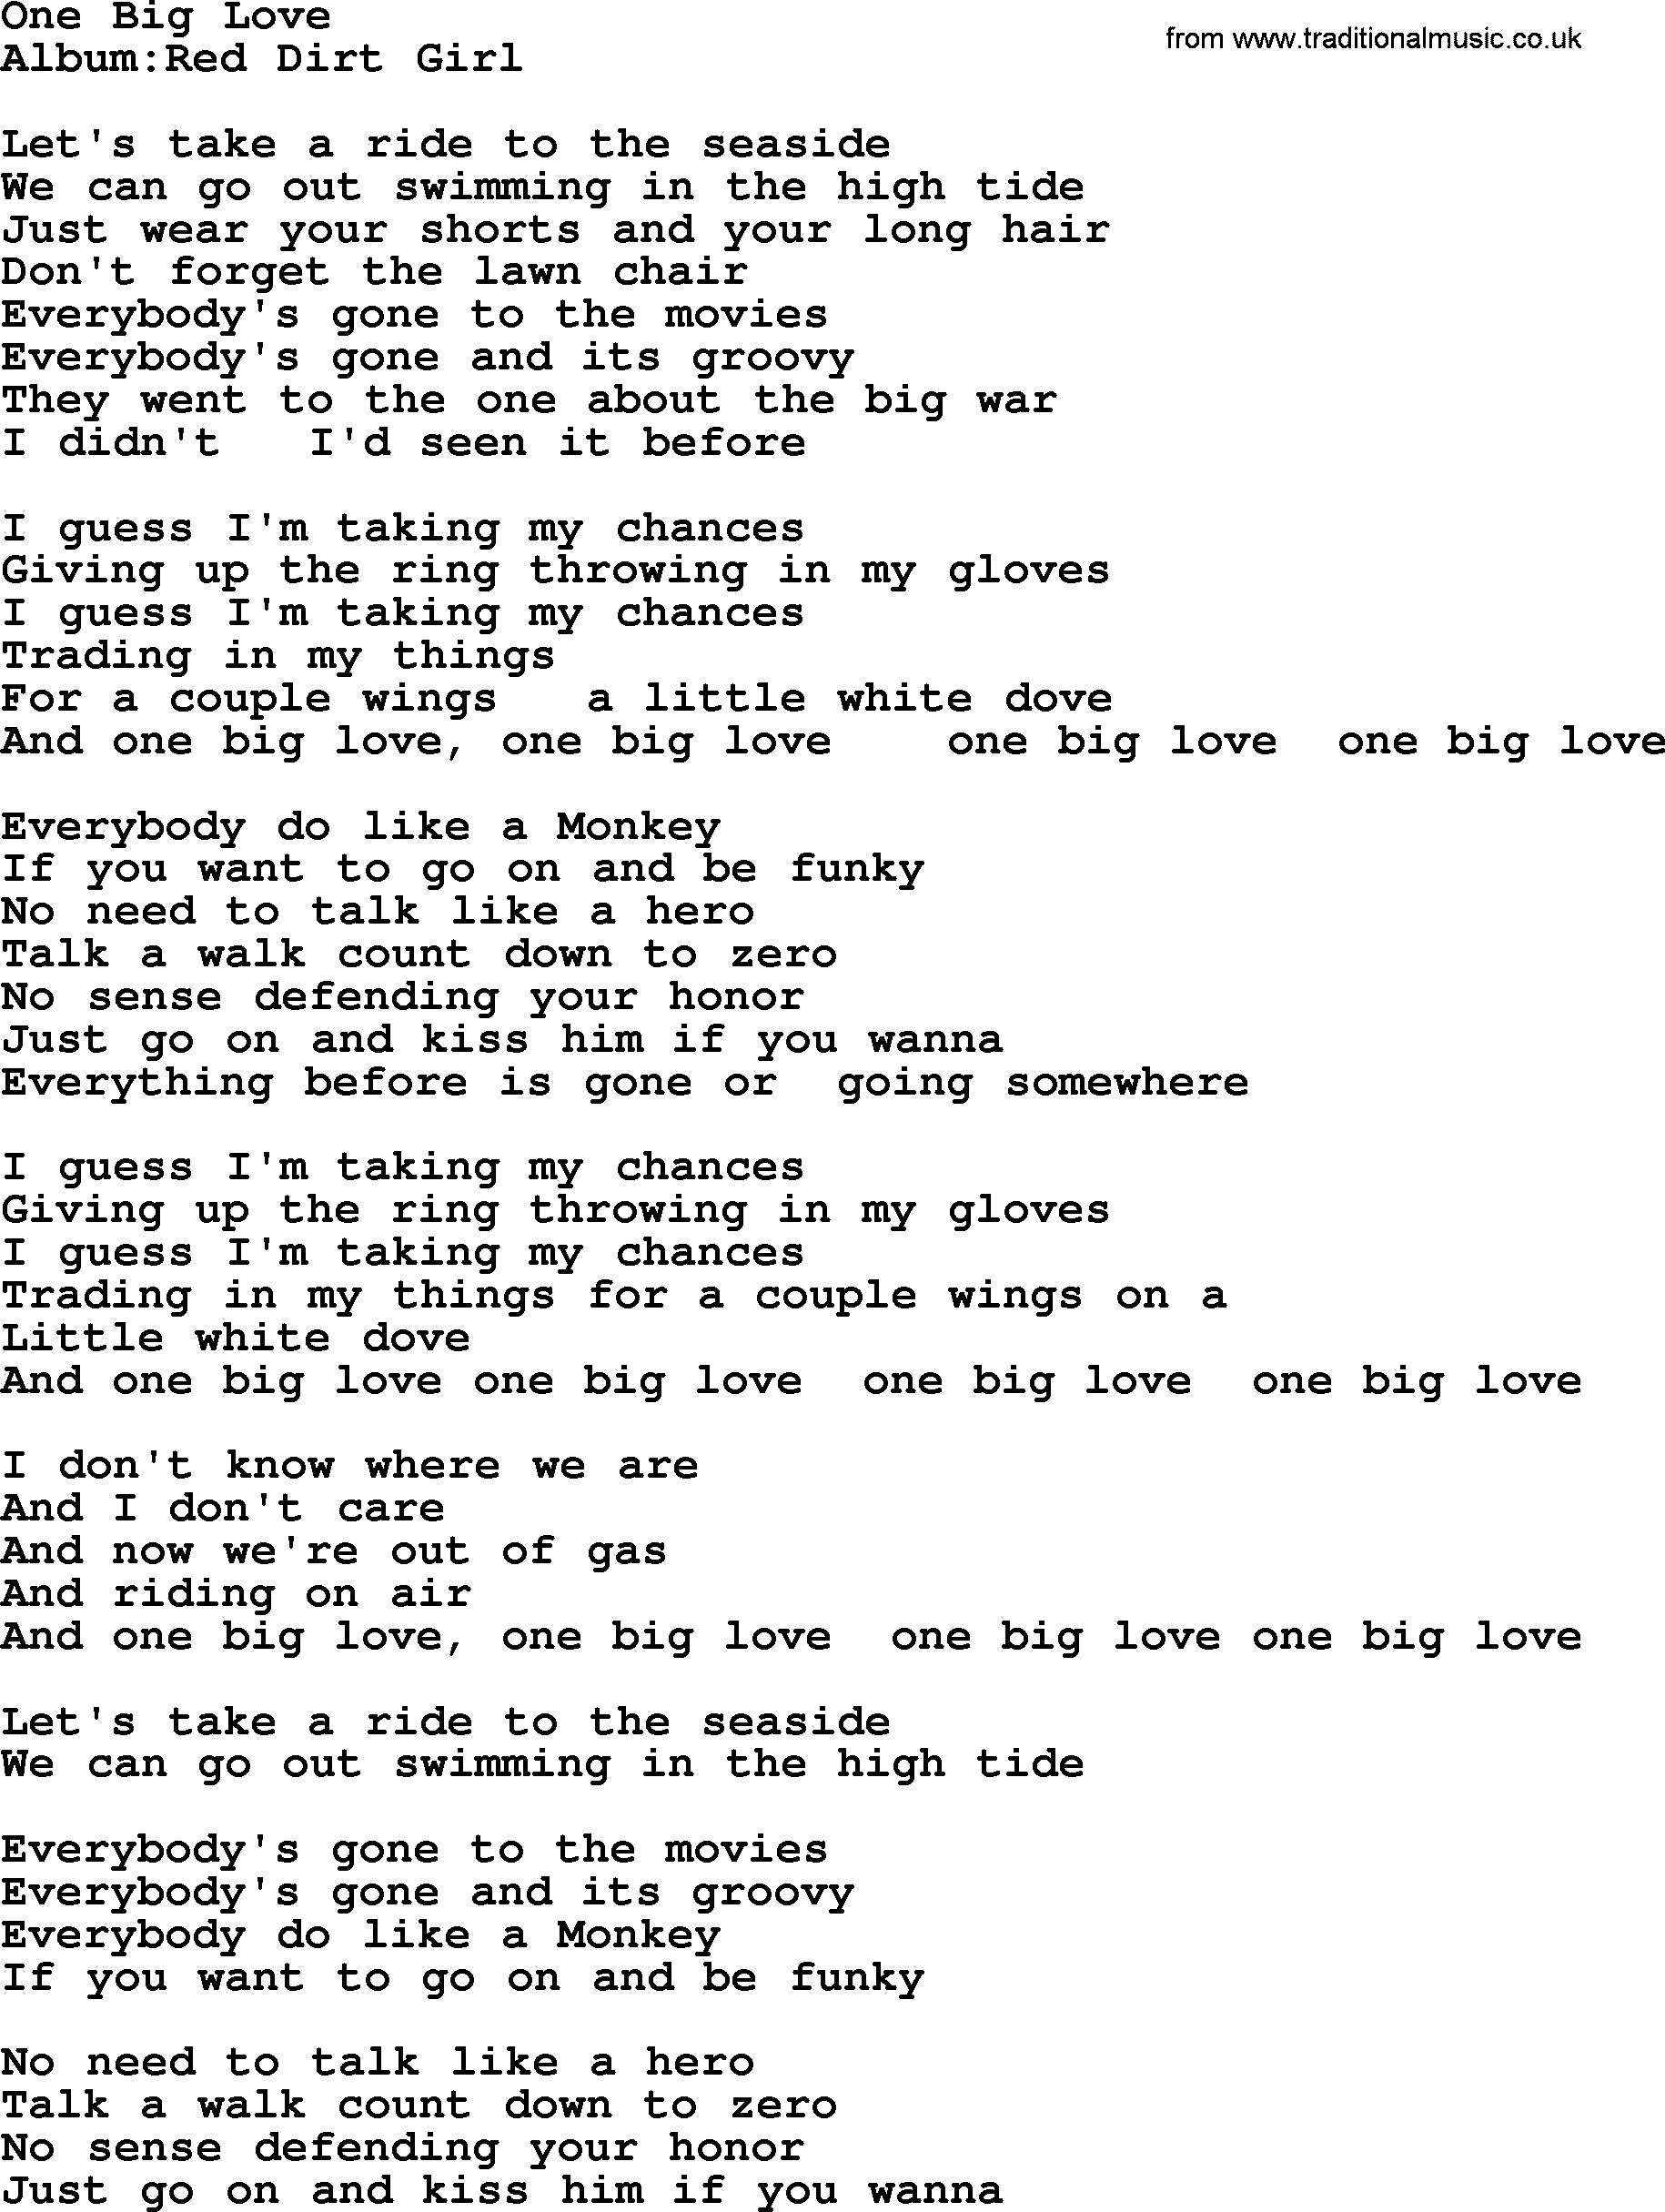 Emmylou Harris song: One Big Love lyrics